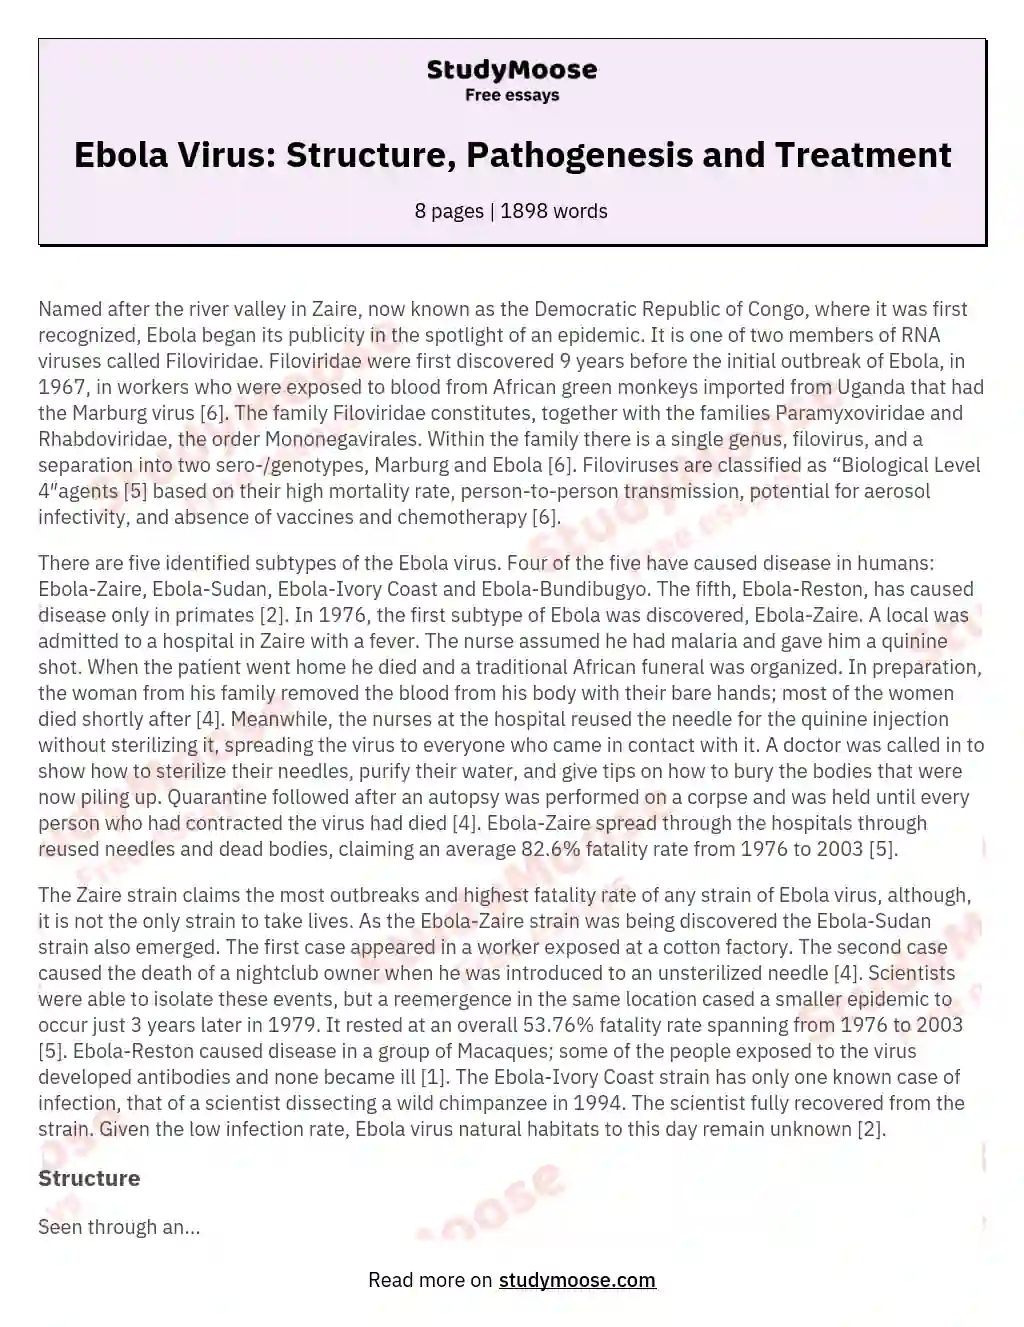 Ebola Virus: Structure, Pathogenesis and Treatment essay